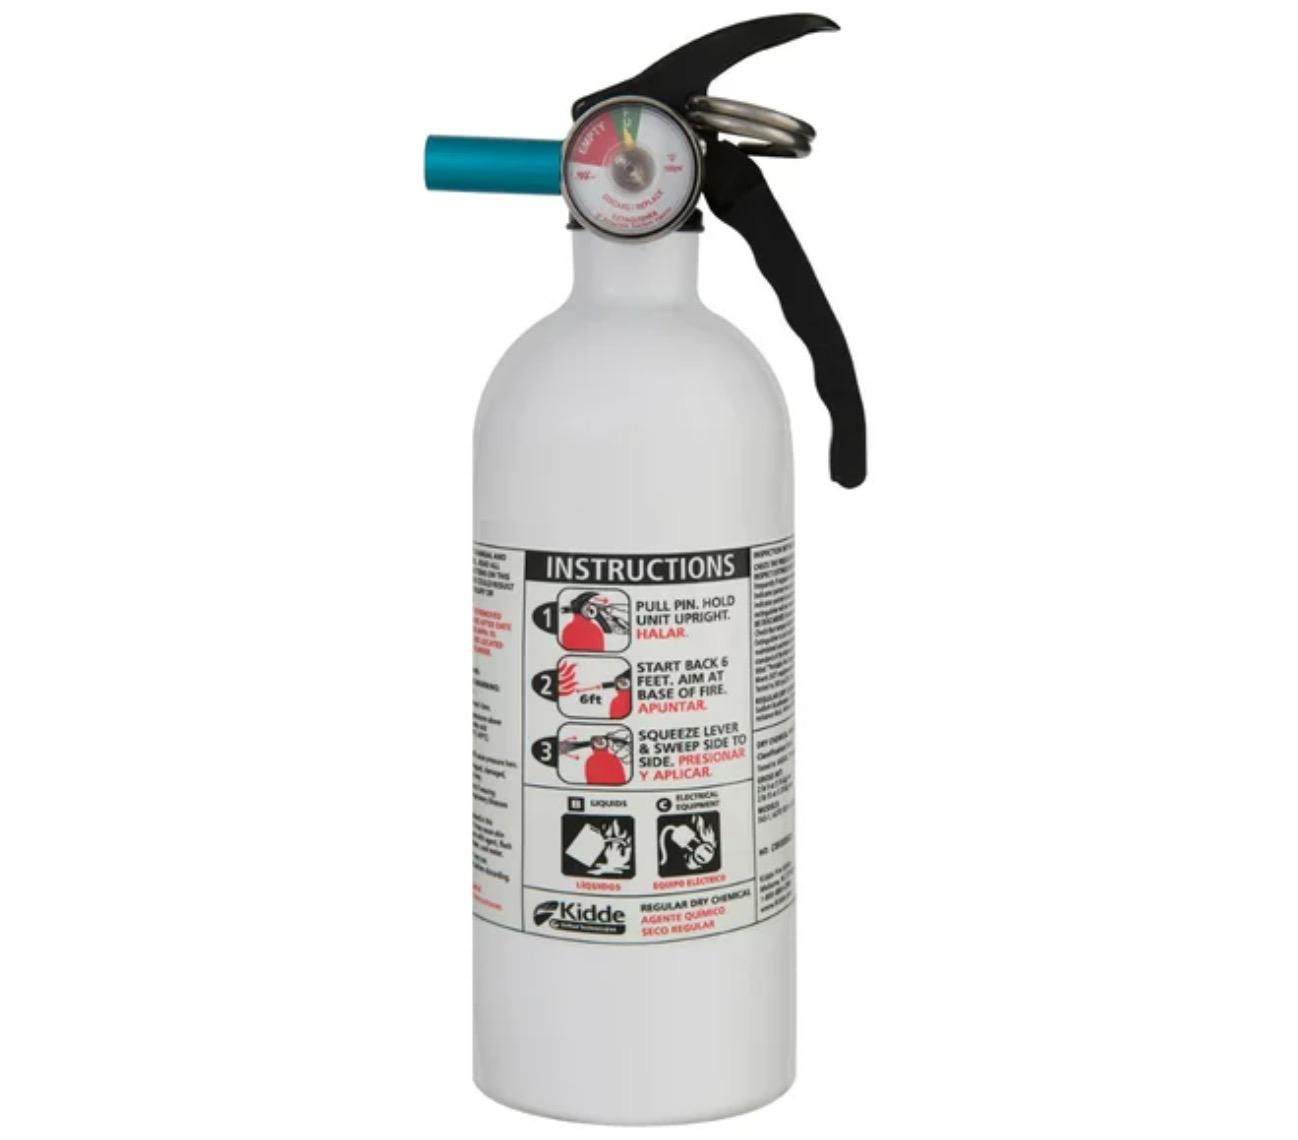 Kidde 5BC Fire Extinguisher for $10.62